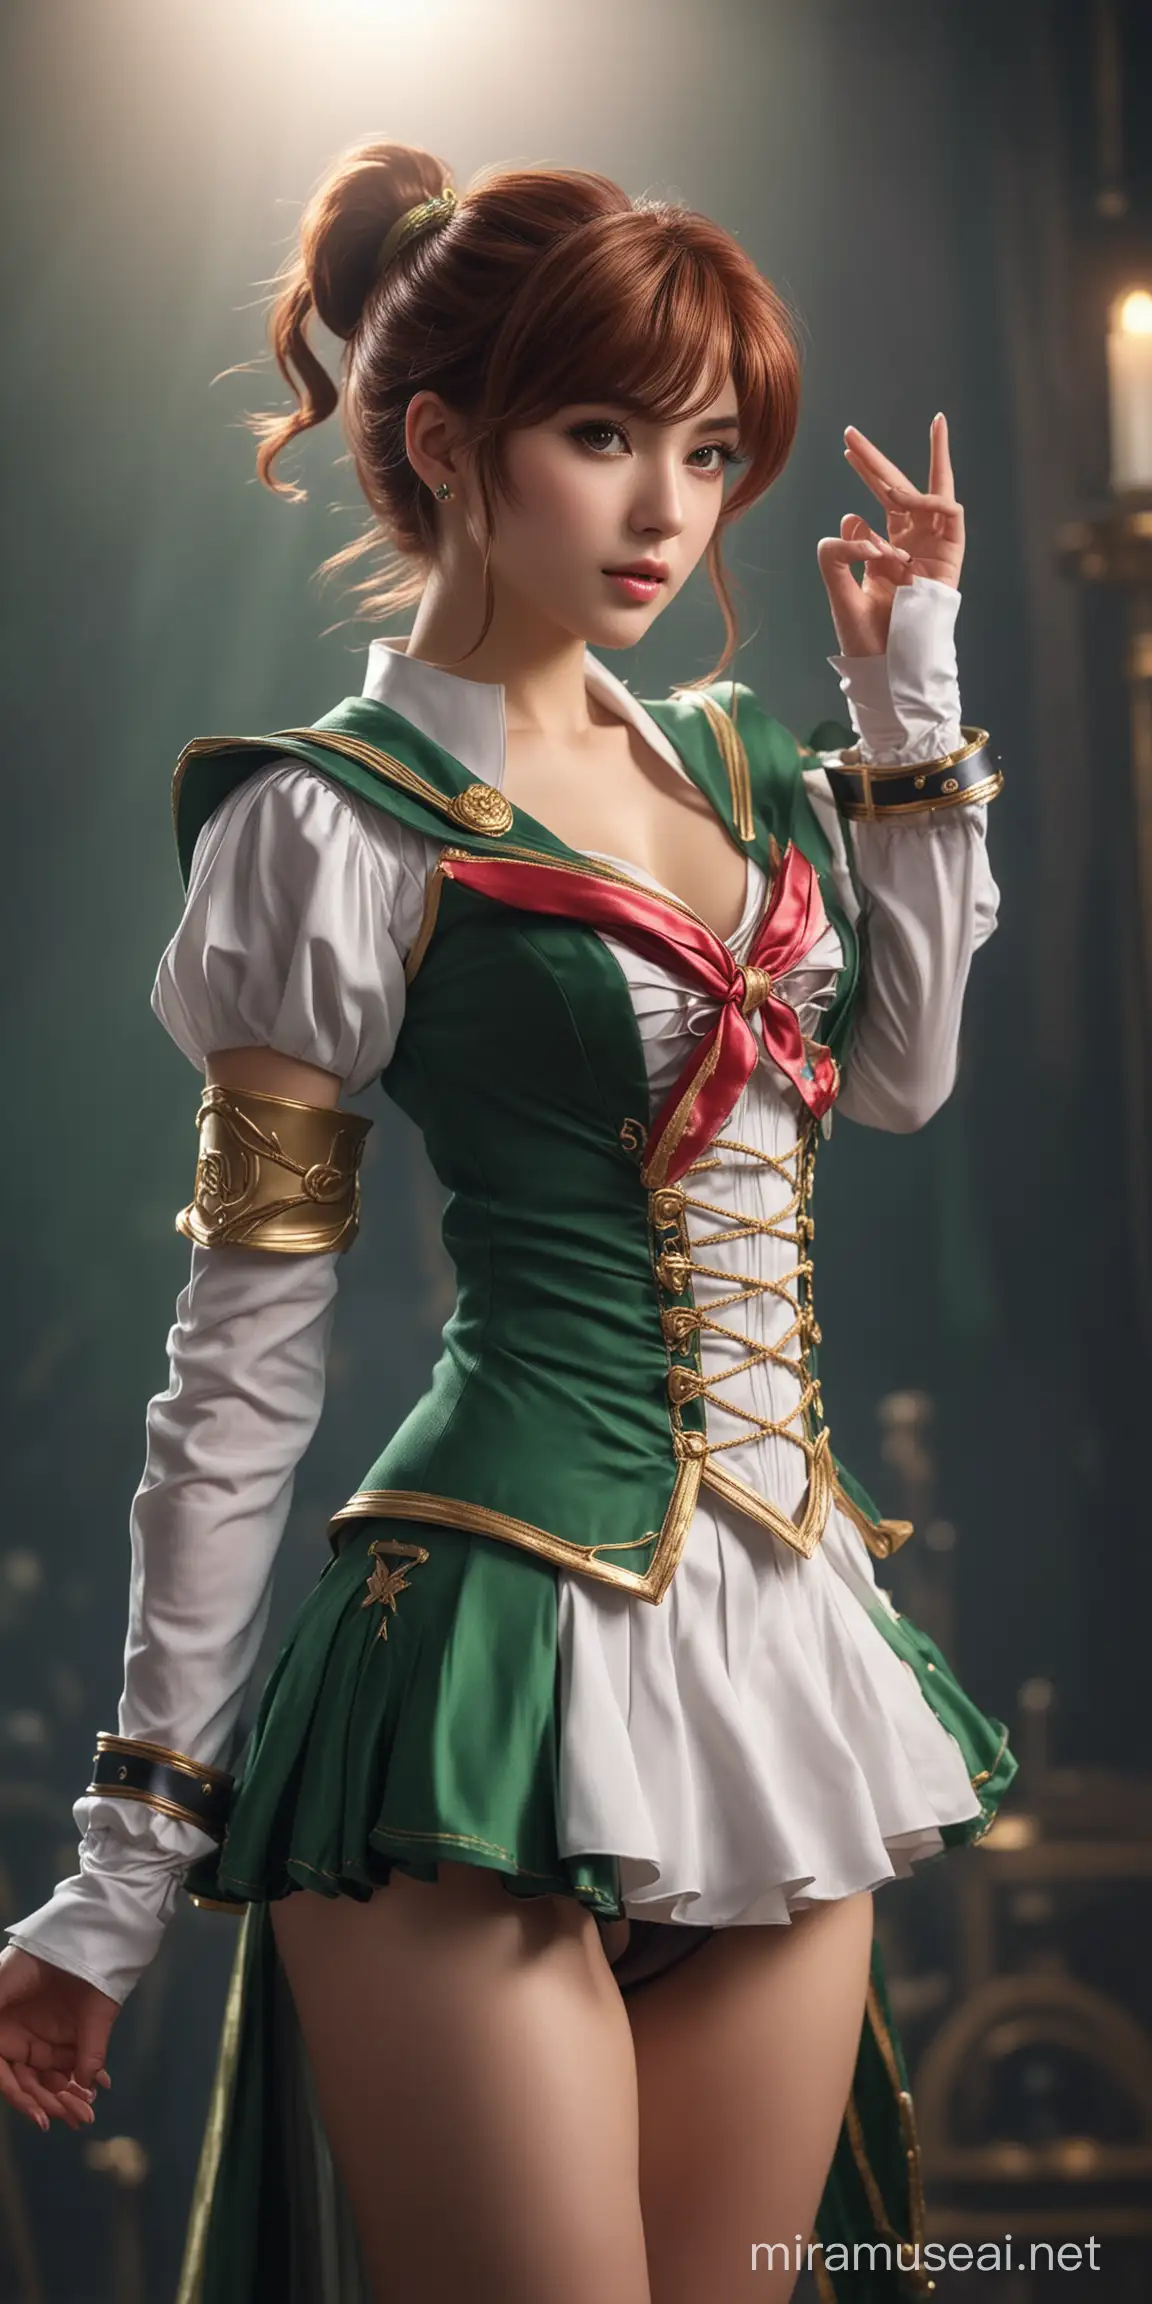 Elegant Empress Sailor Jupiter Poses in Cinematic Studio Lighting